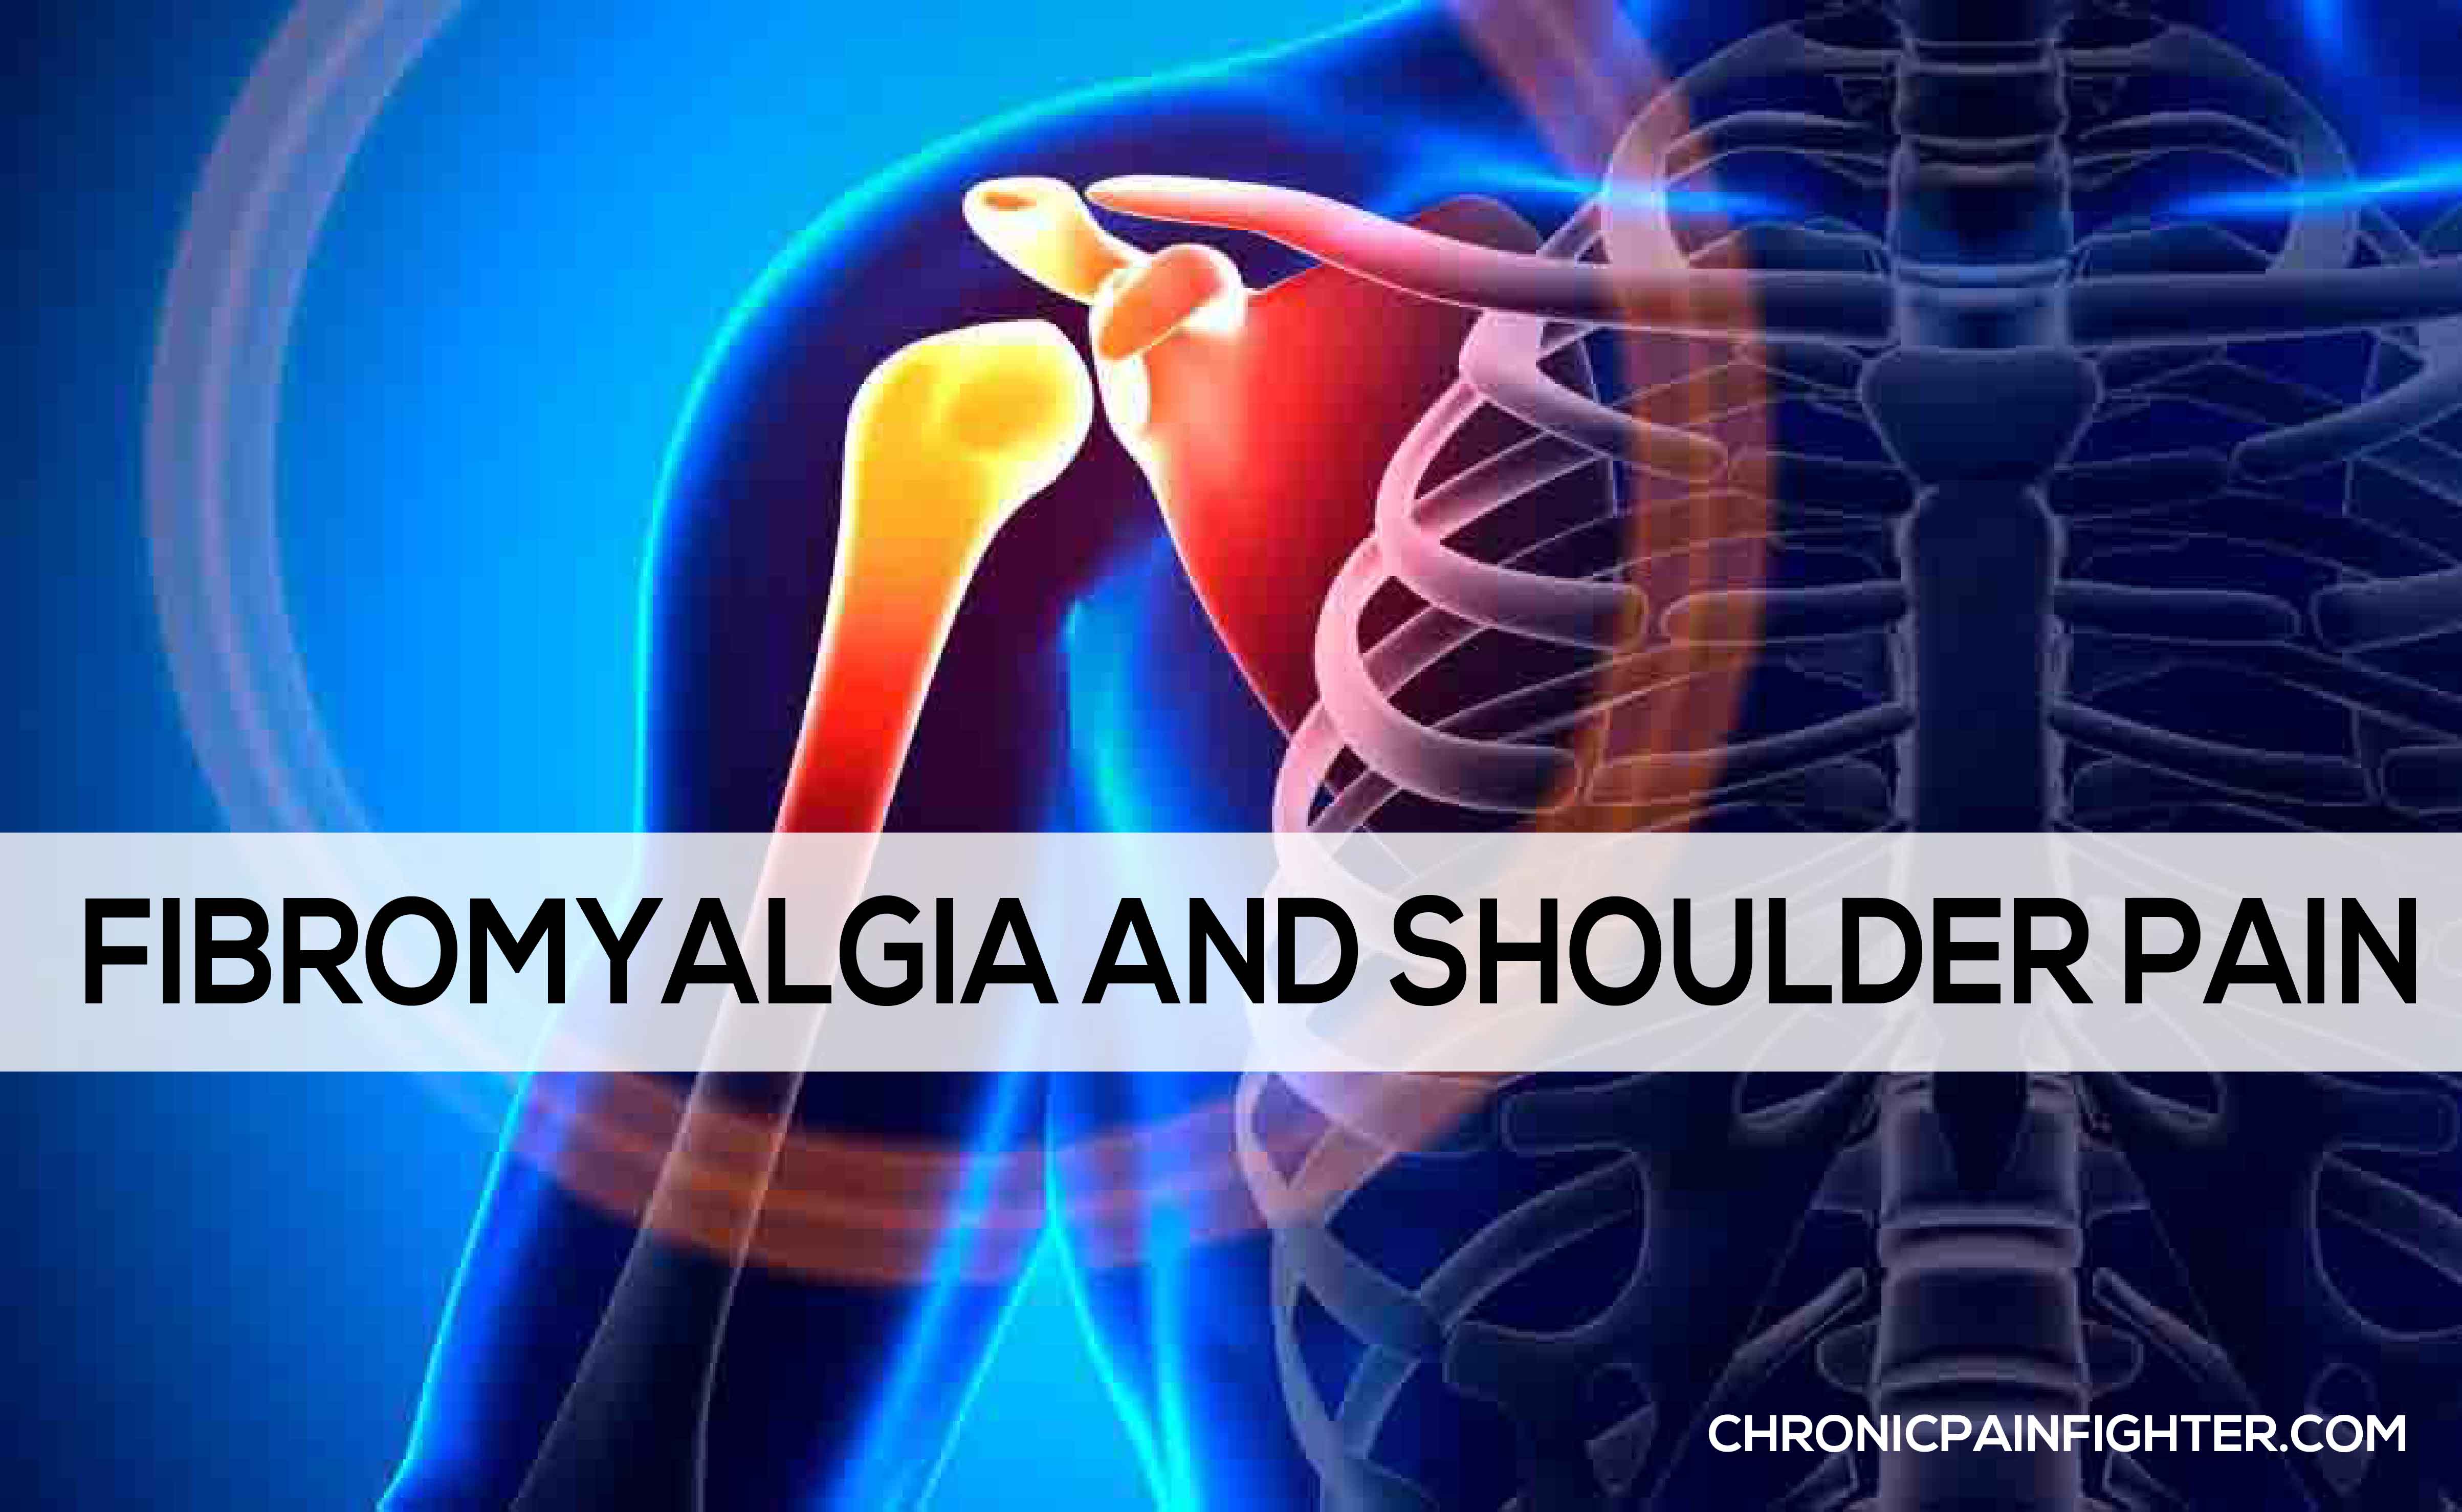 Fibromyalgia and Shoulder Pain